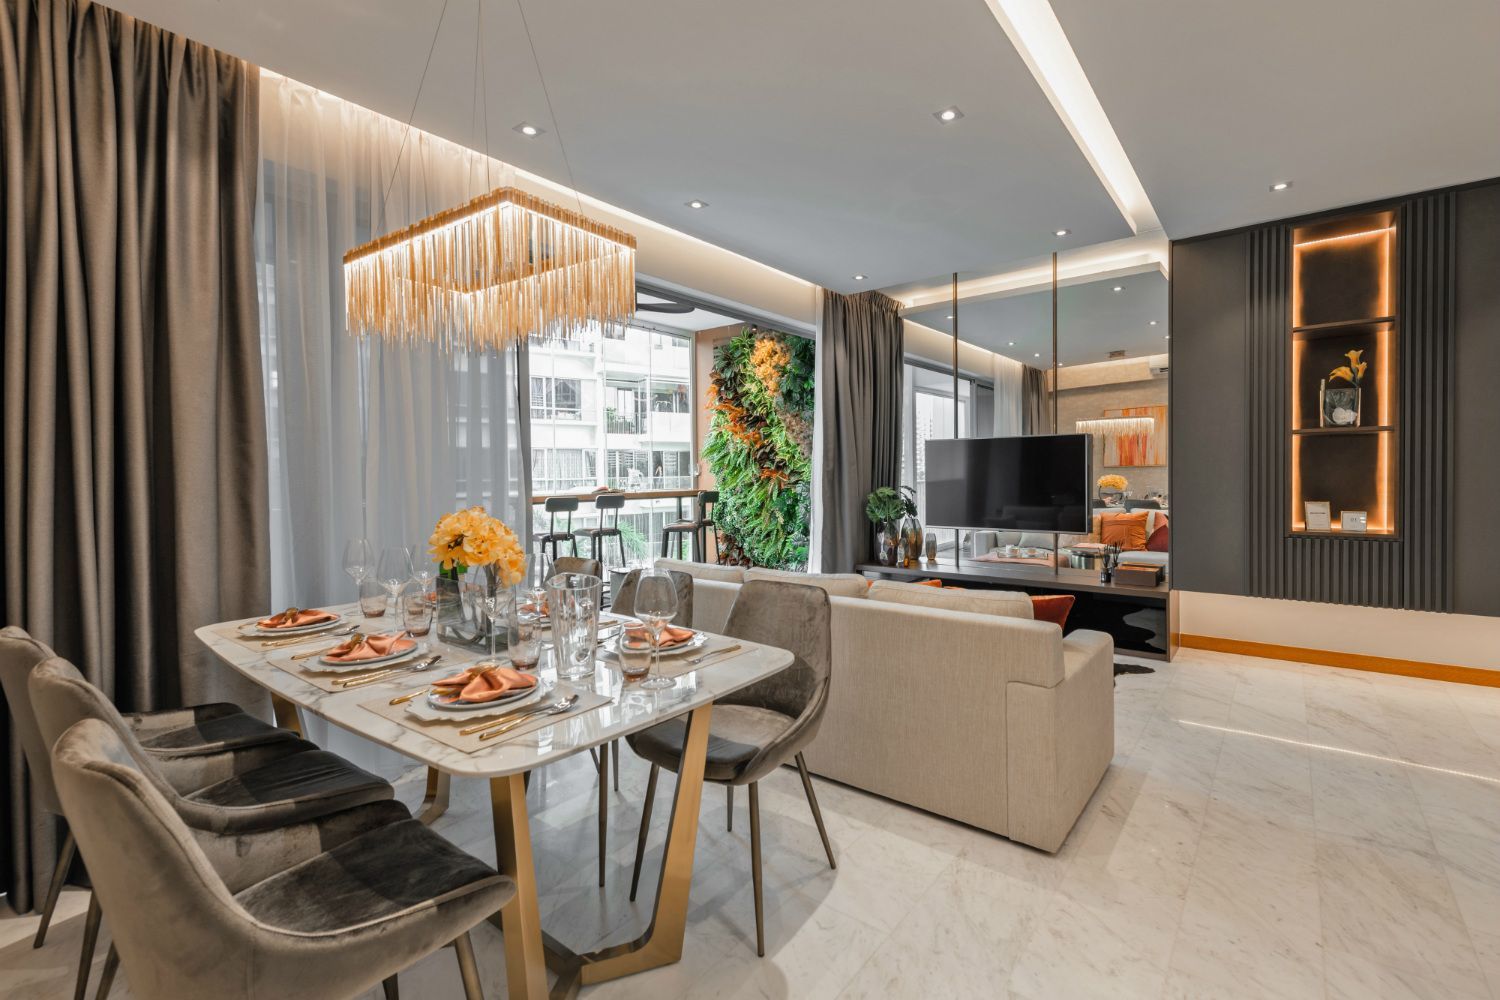 squarerooms-mr-shopper-studio-dining-room-glamour-luxury-lighting-chandelier